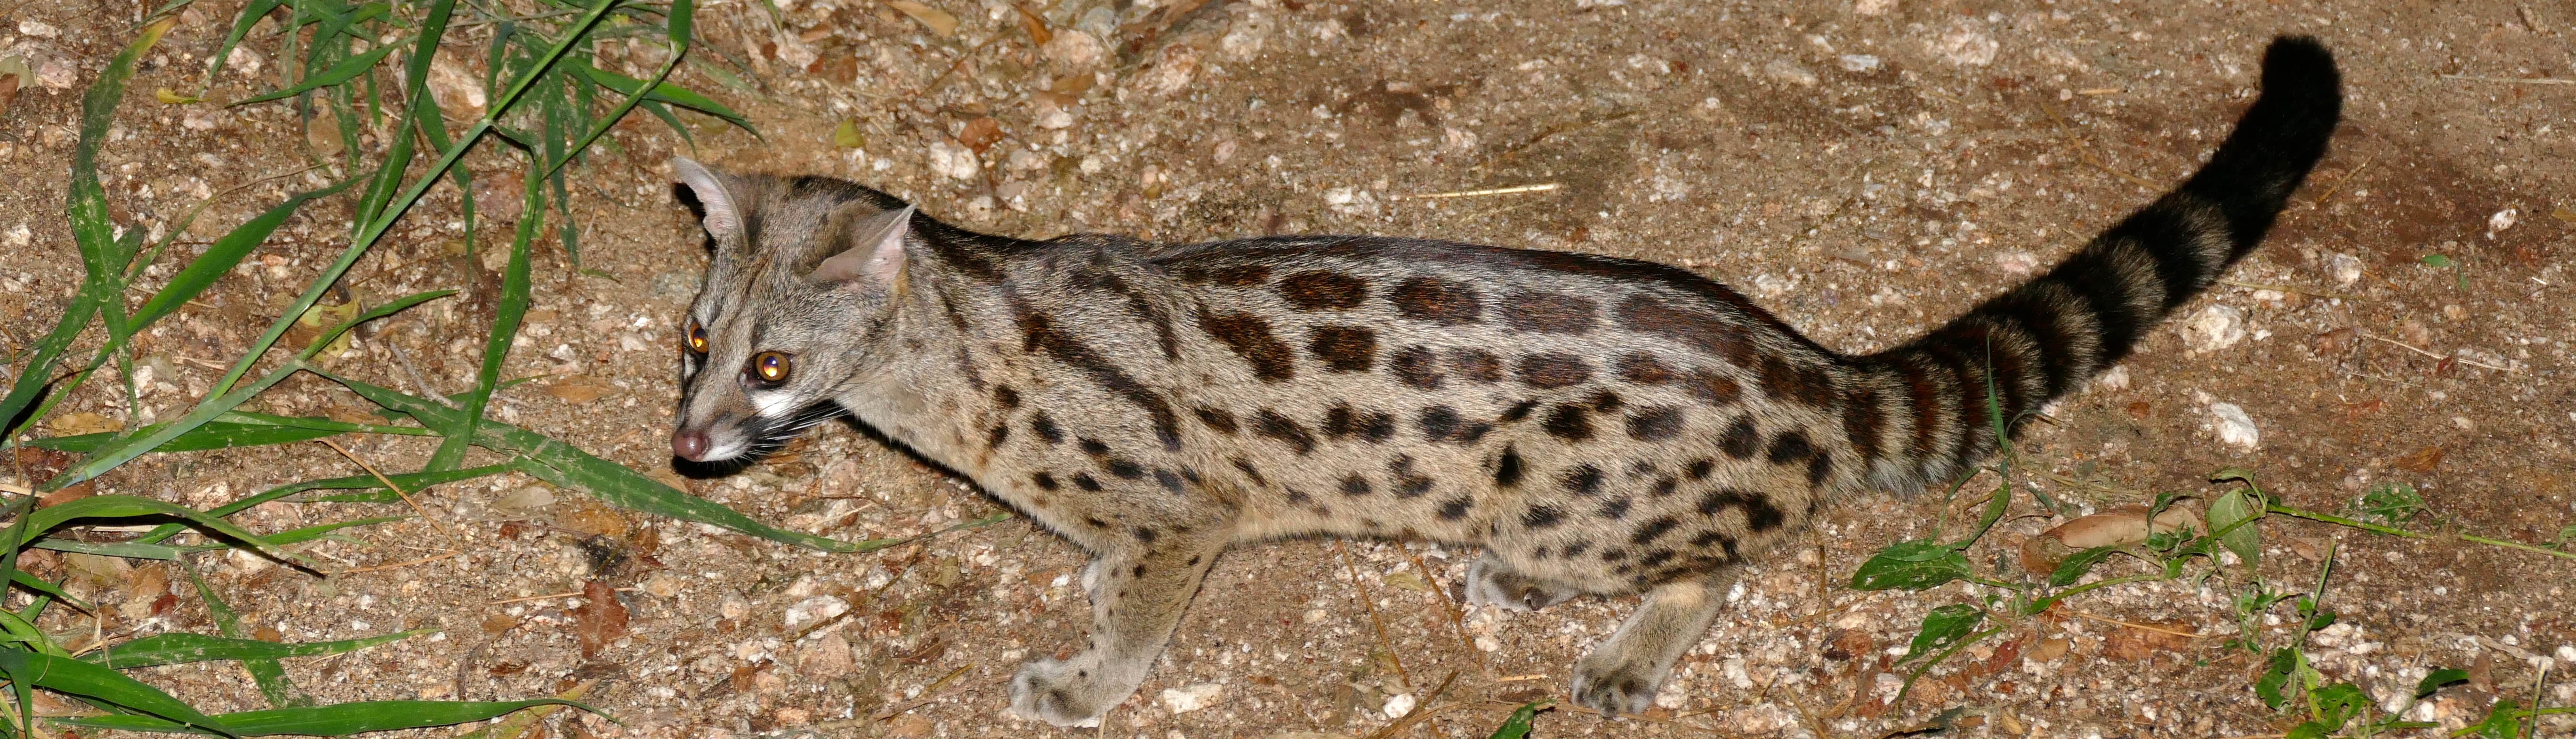 Large-spotted genet | Wikimedia